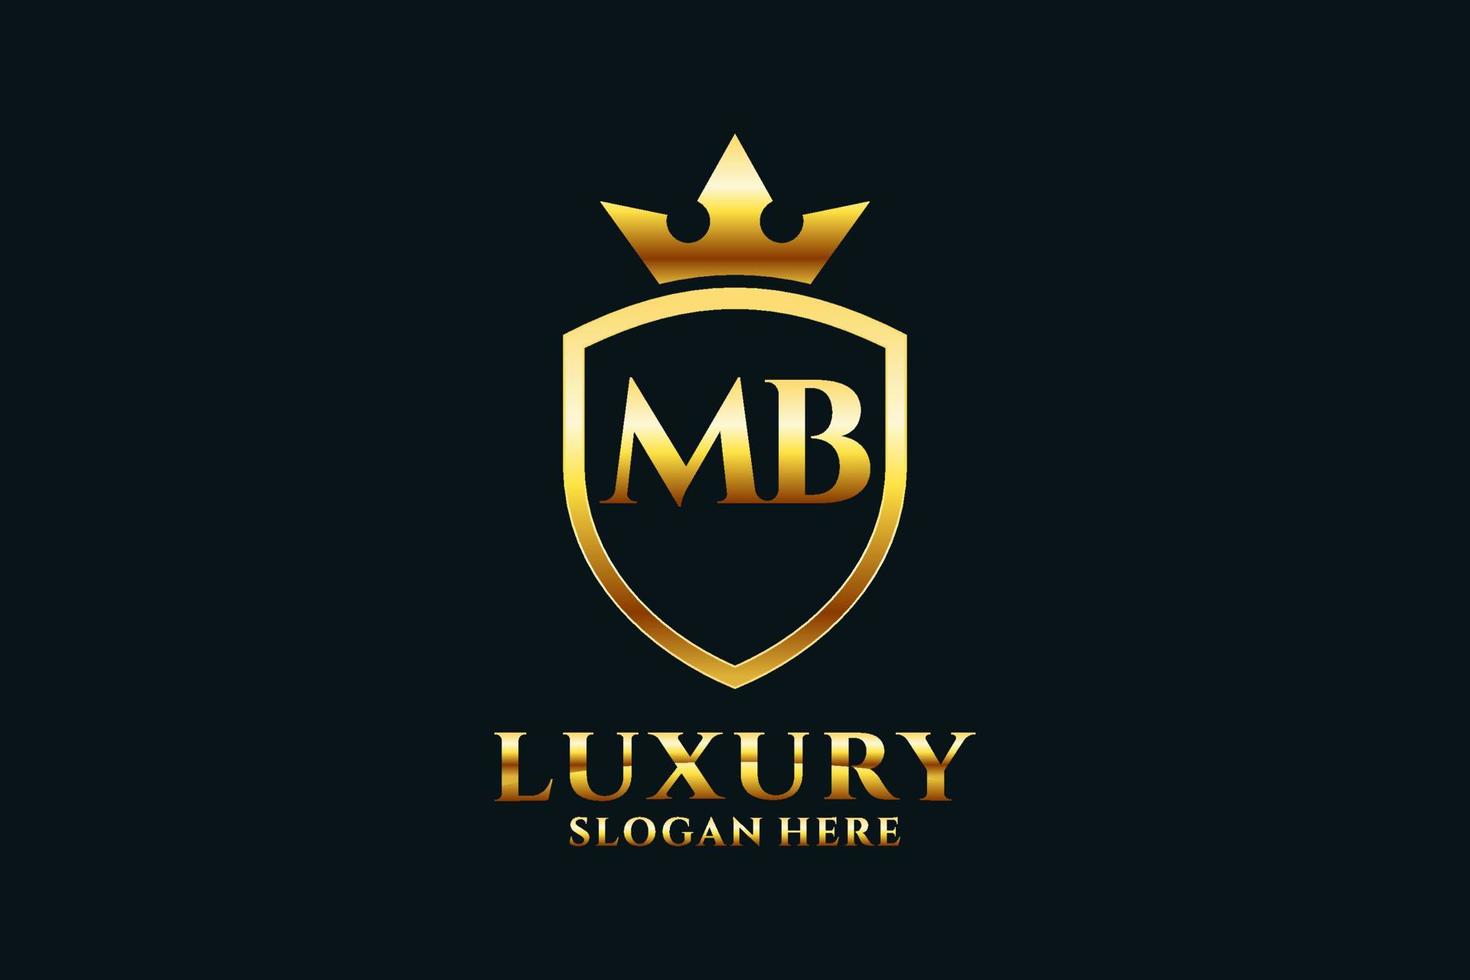 inicial mb elegante logotipo de monograma de luxo ou modelo de crachá com pergaminhos e coroa real - perfeito para projetos de marca luxuosos vetor